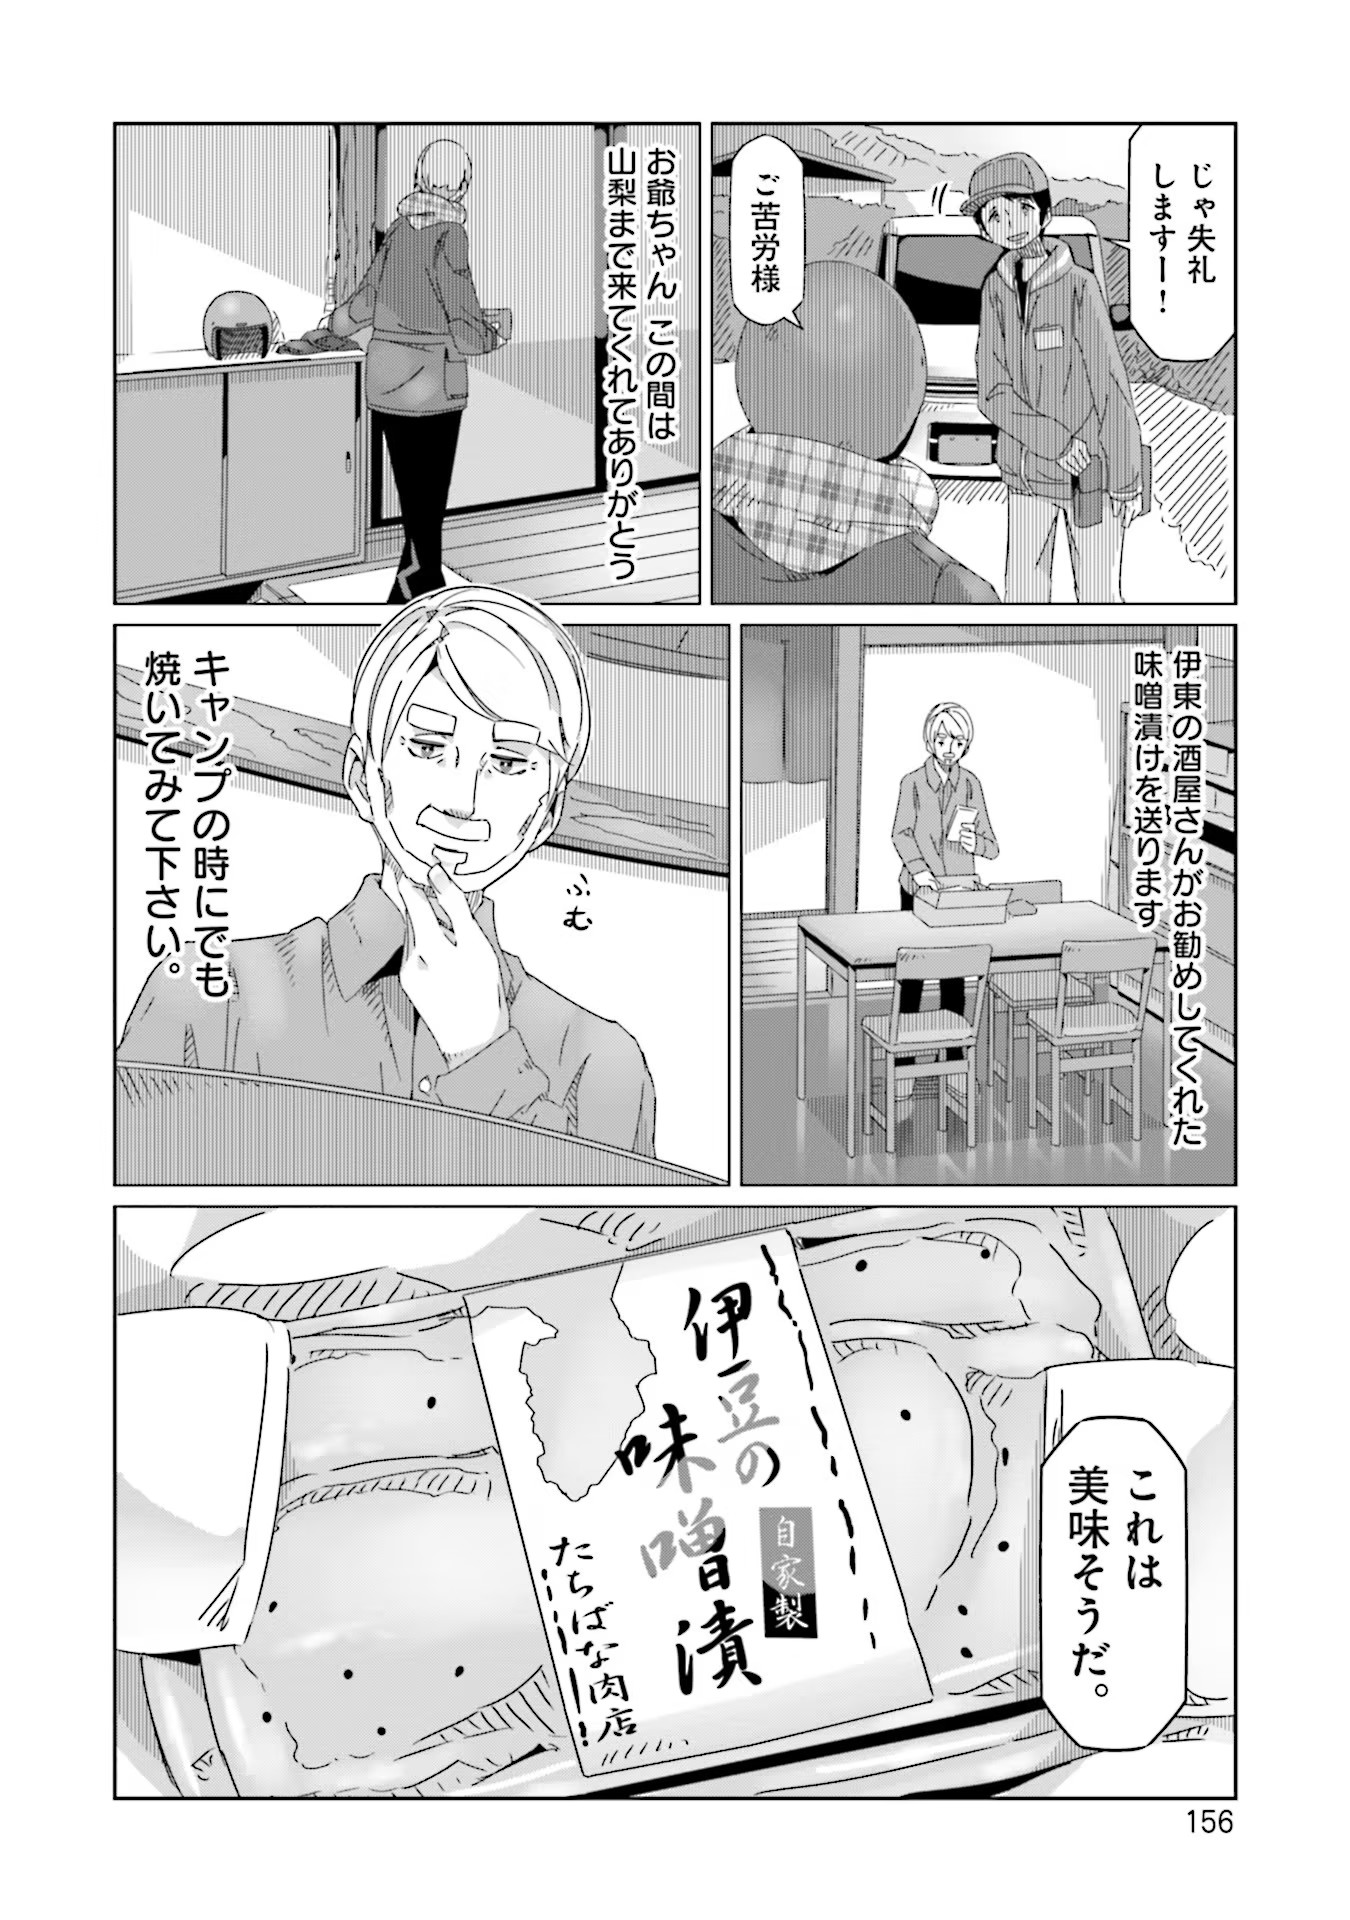 Yuru Camp - Chapter 52 - Page 24